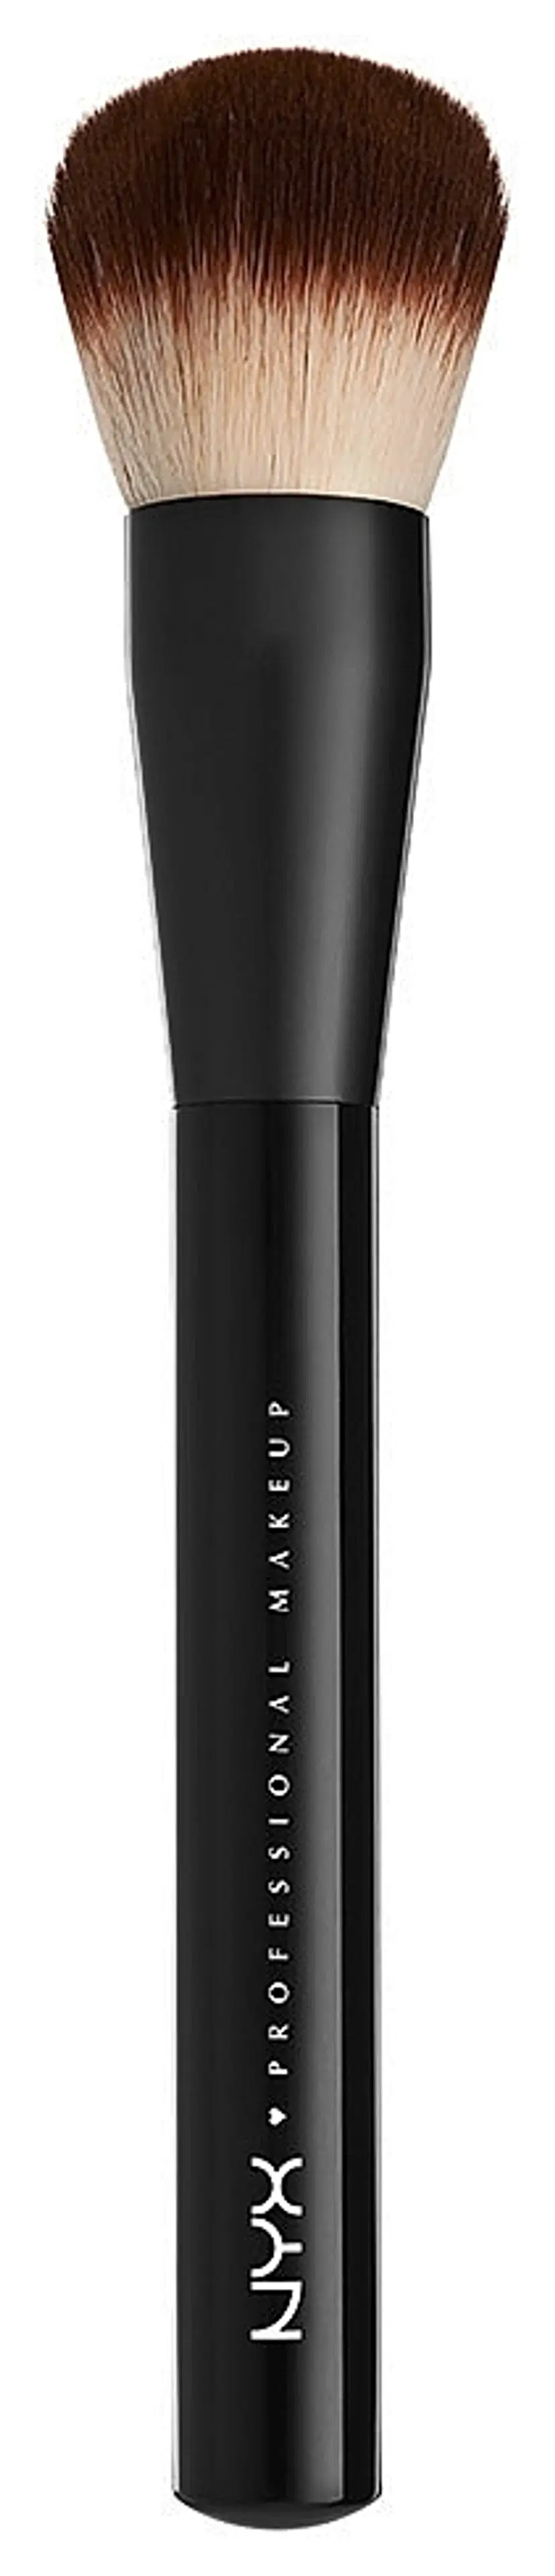 NYX Professional Makeup Pro Brush Multipurpose Buffing meikkisivellin